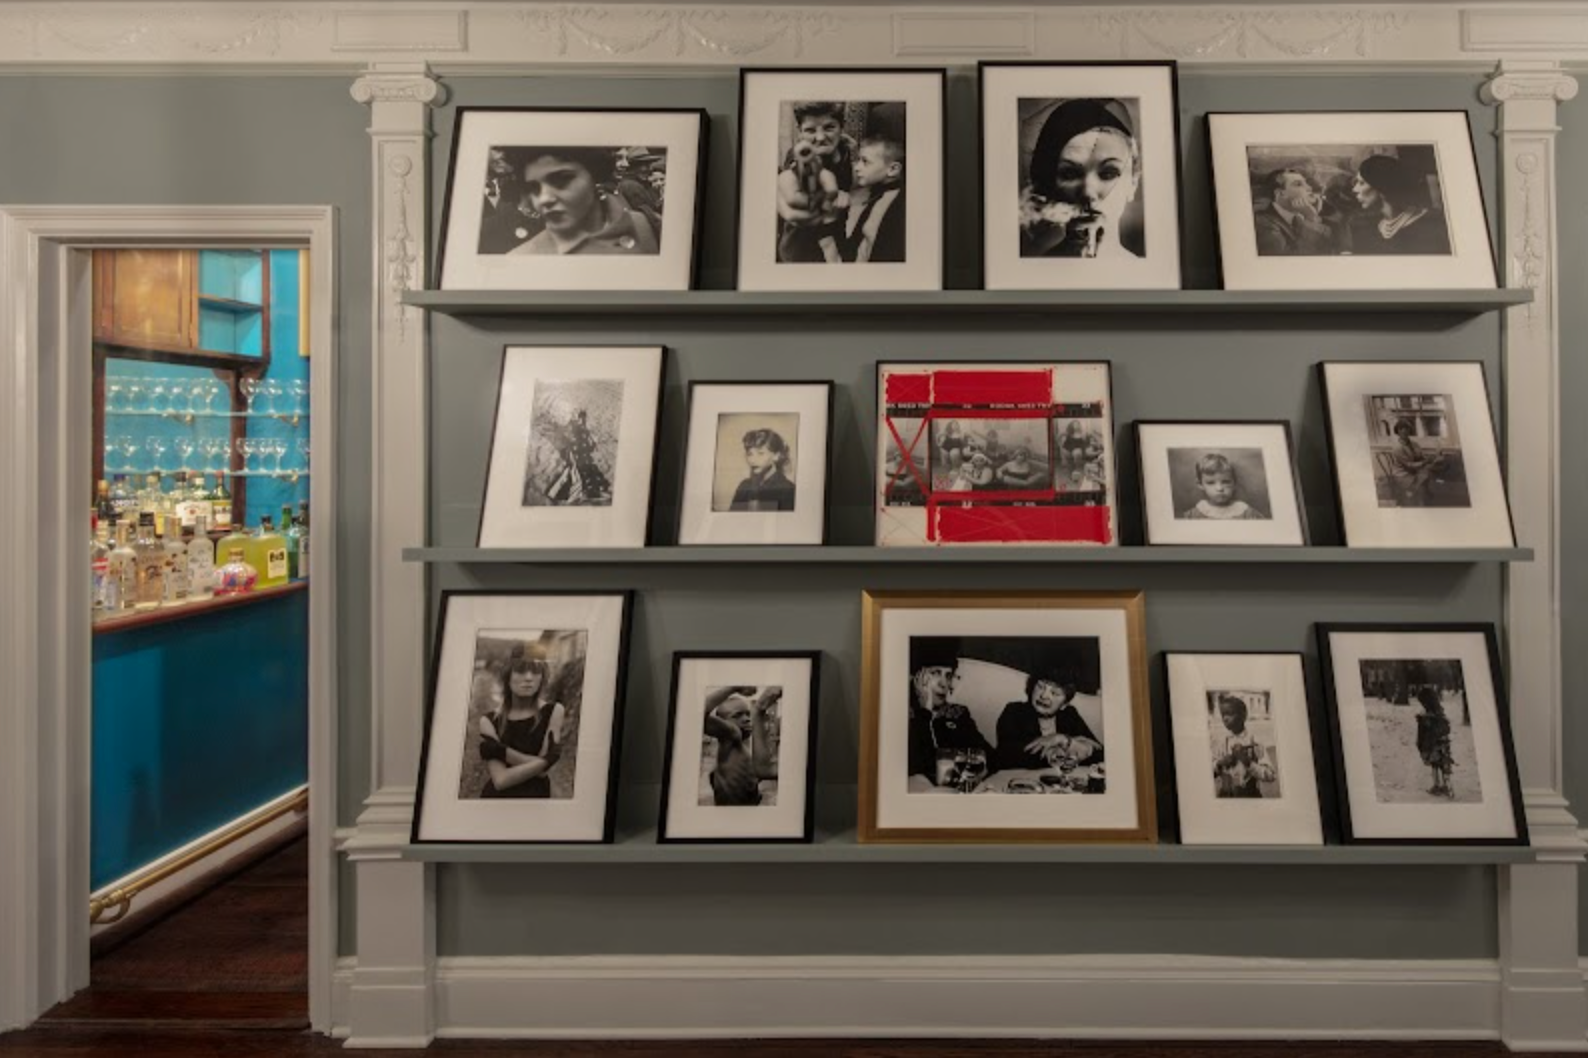 Interior of Alice Sachs Zimet's home; 3 rows of shelves showcasing photographs